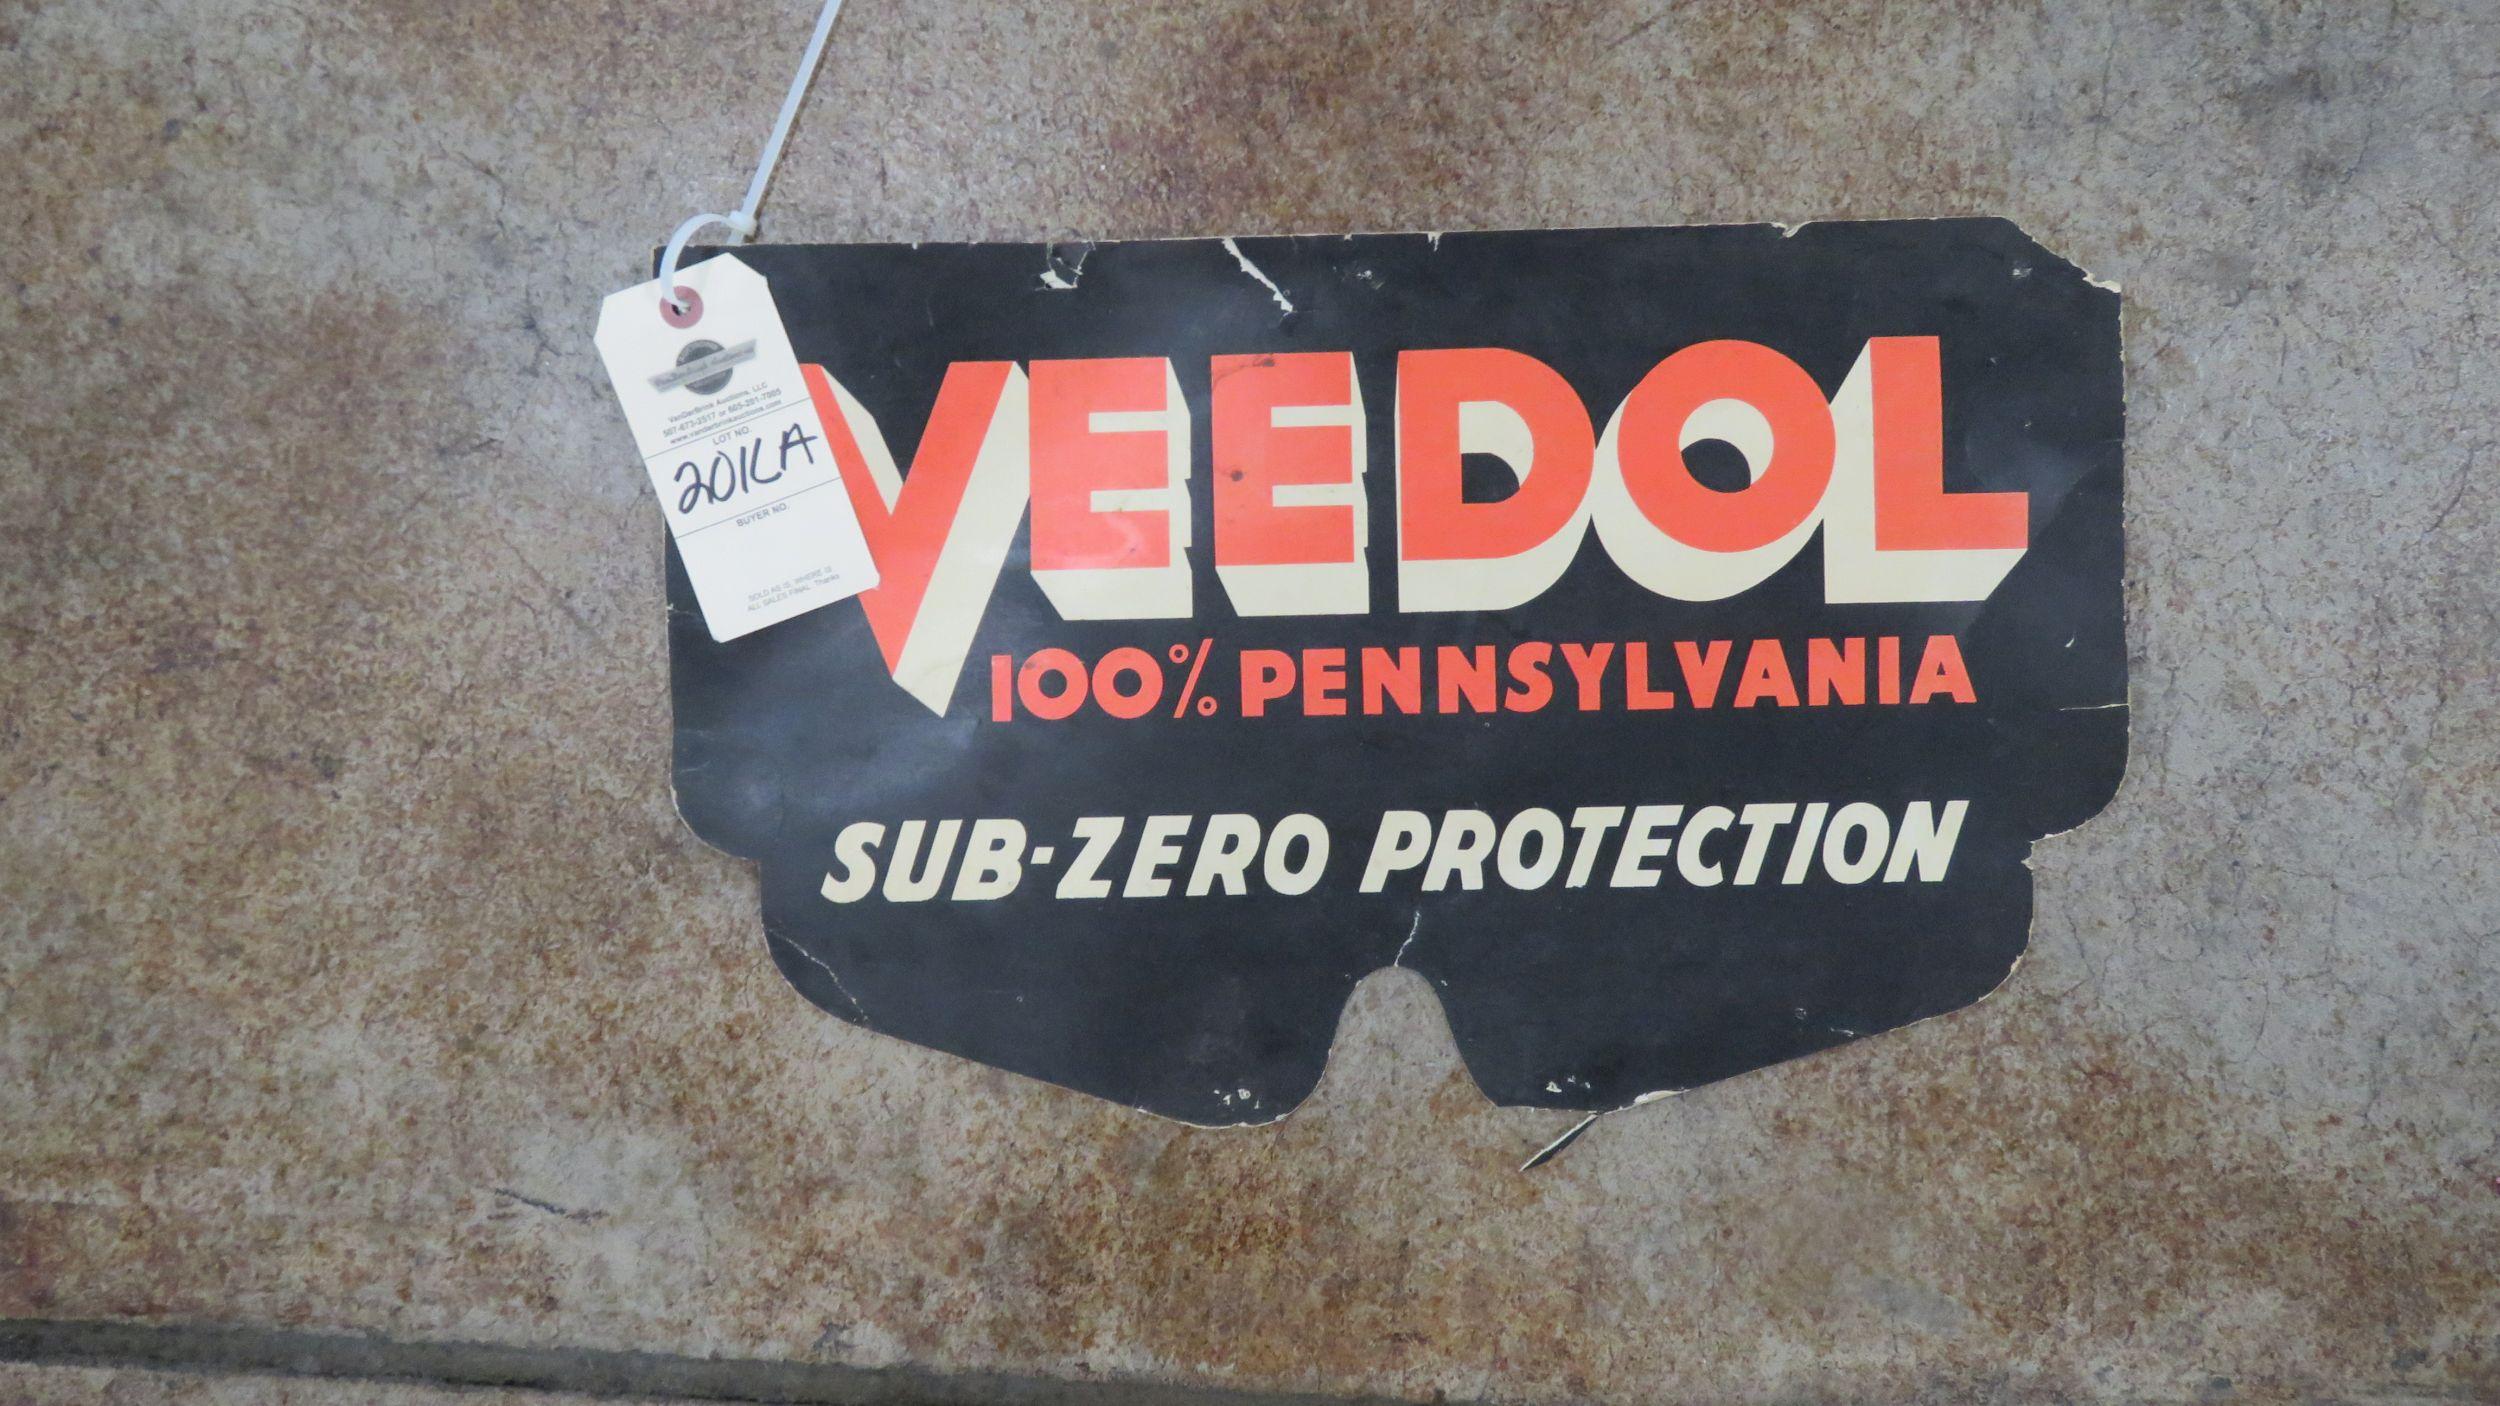 Veedol Waxed Cardboard Point of Sale Sign